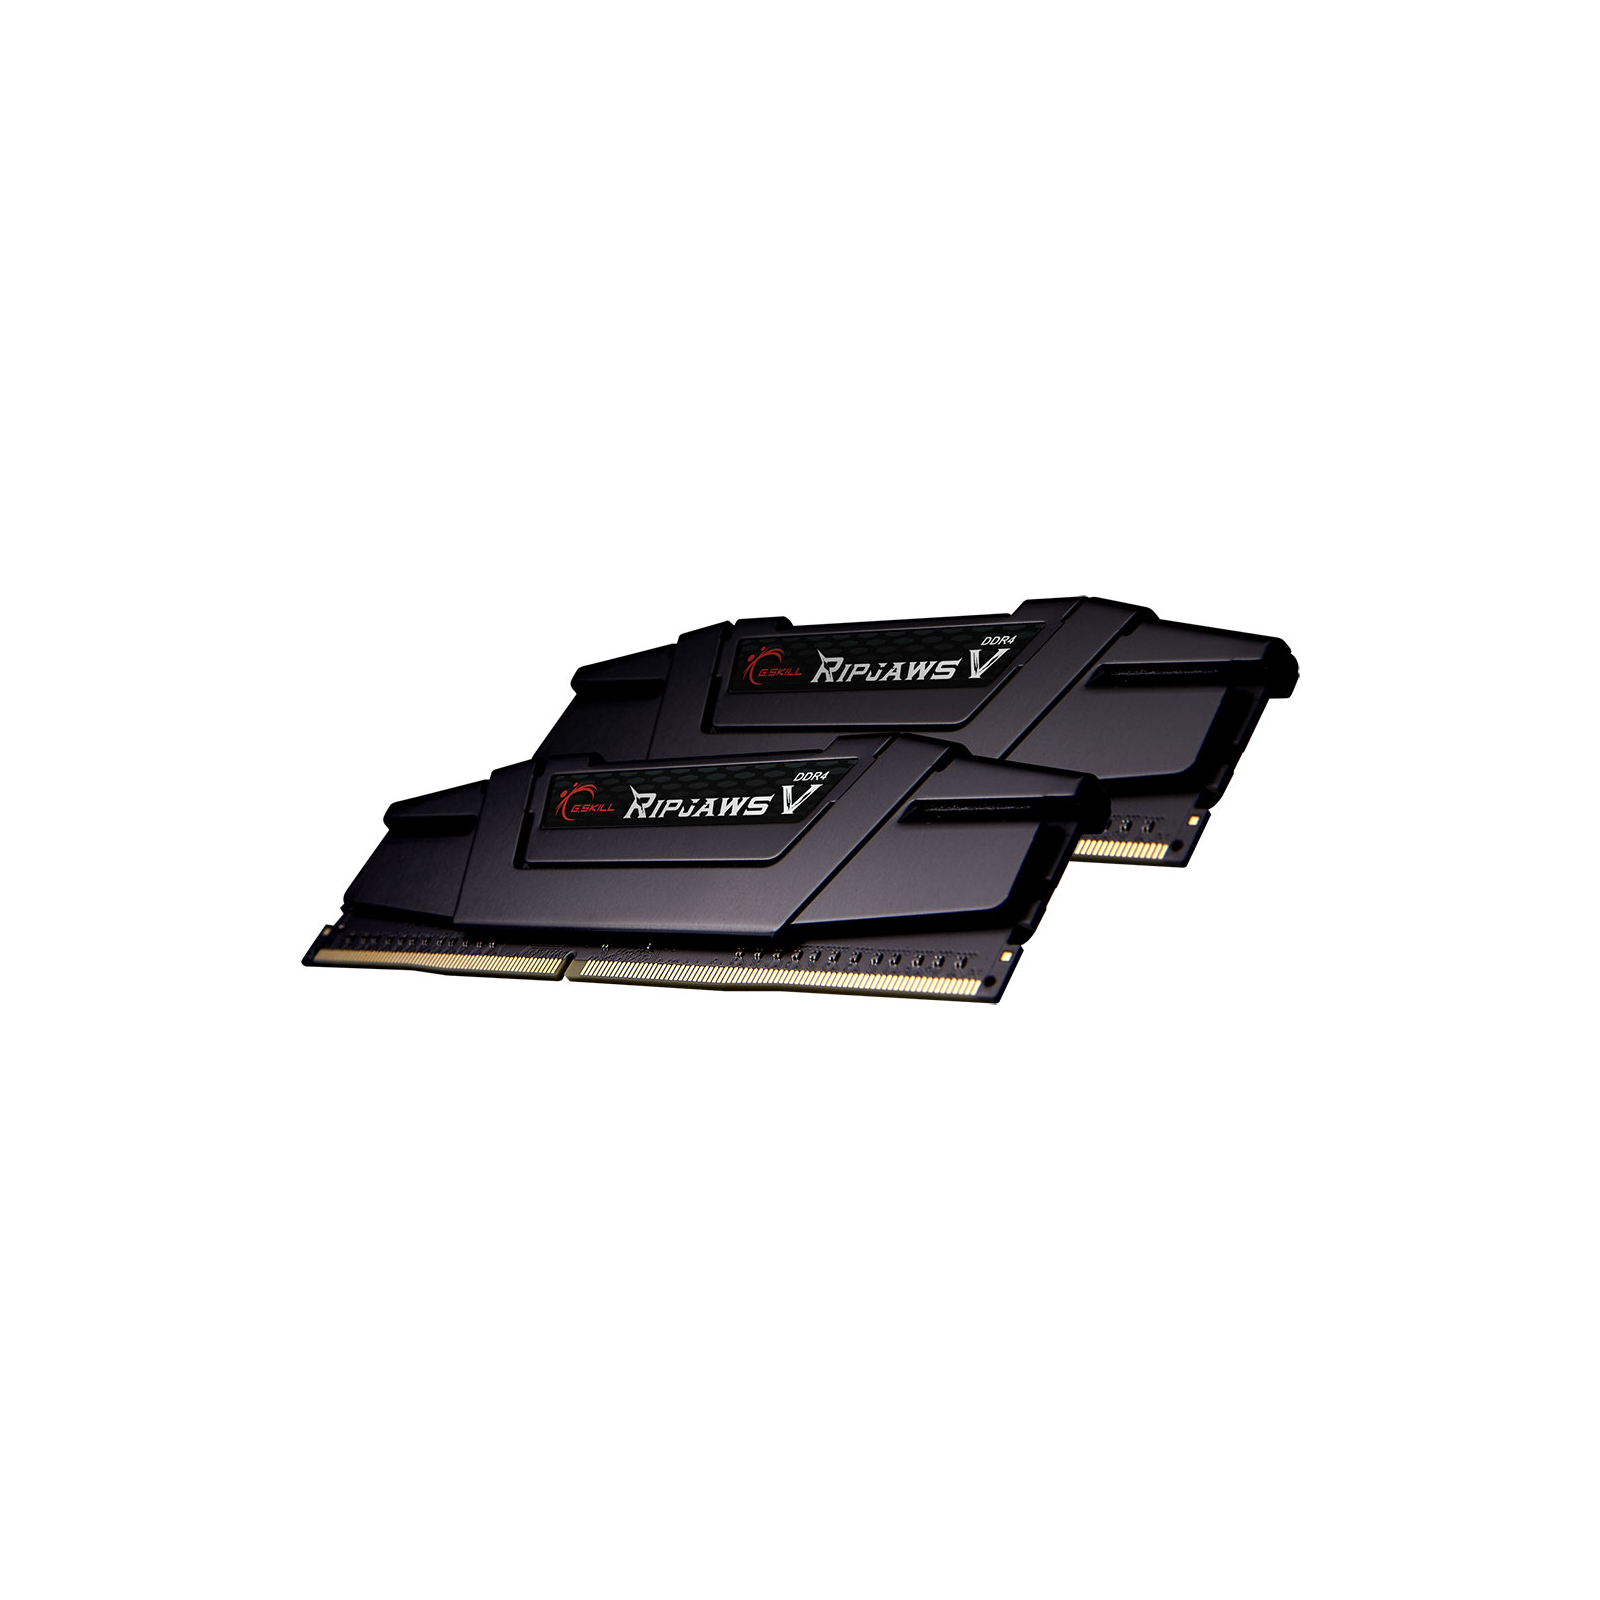 Модуль памяти для компьютера DDR4 16GB (2x8GB) 4400 MHz RipjawsV Black G.Skill (F4-4400C18D-16GVKC) изображение 2